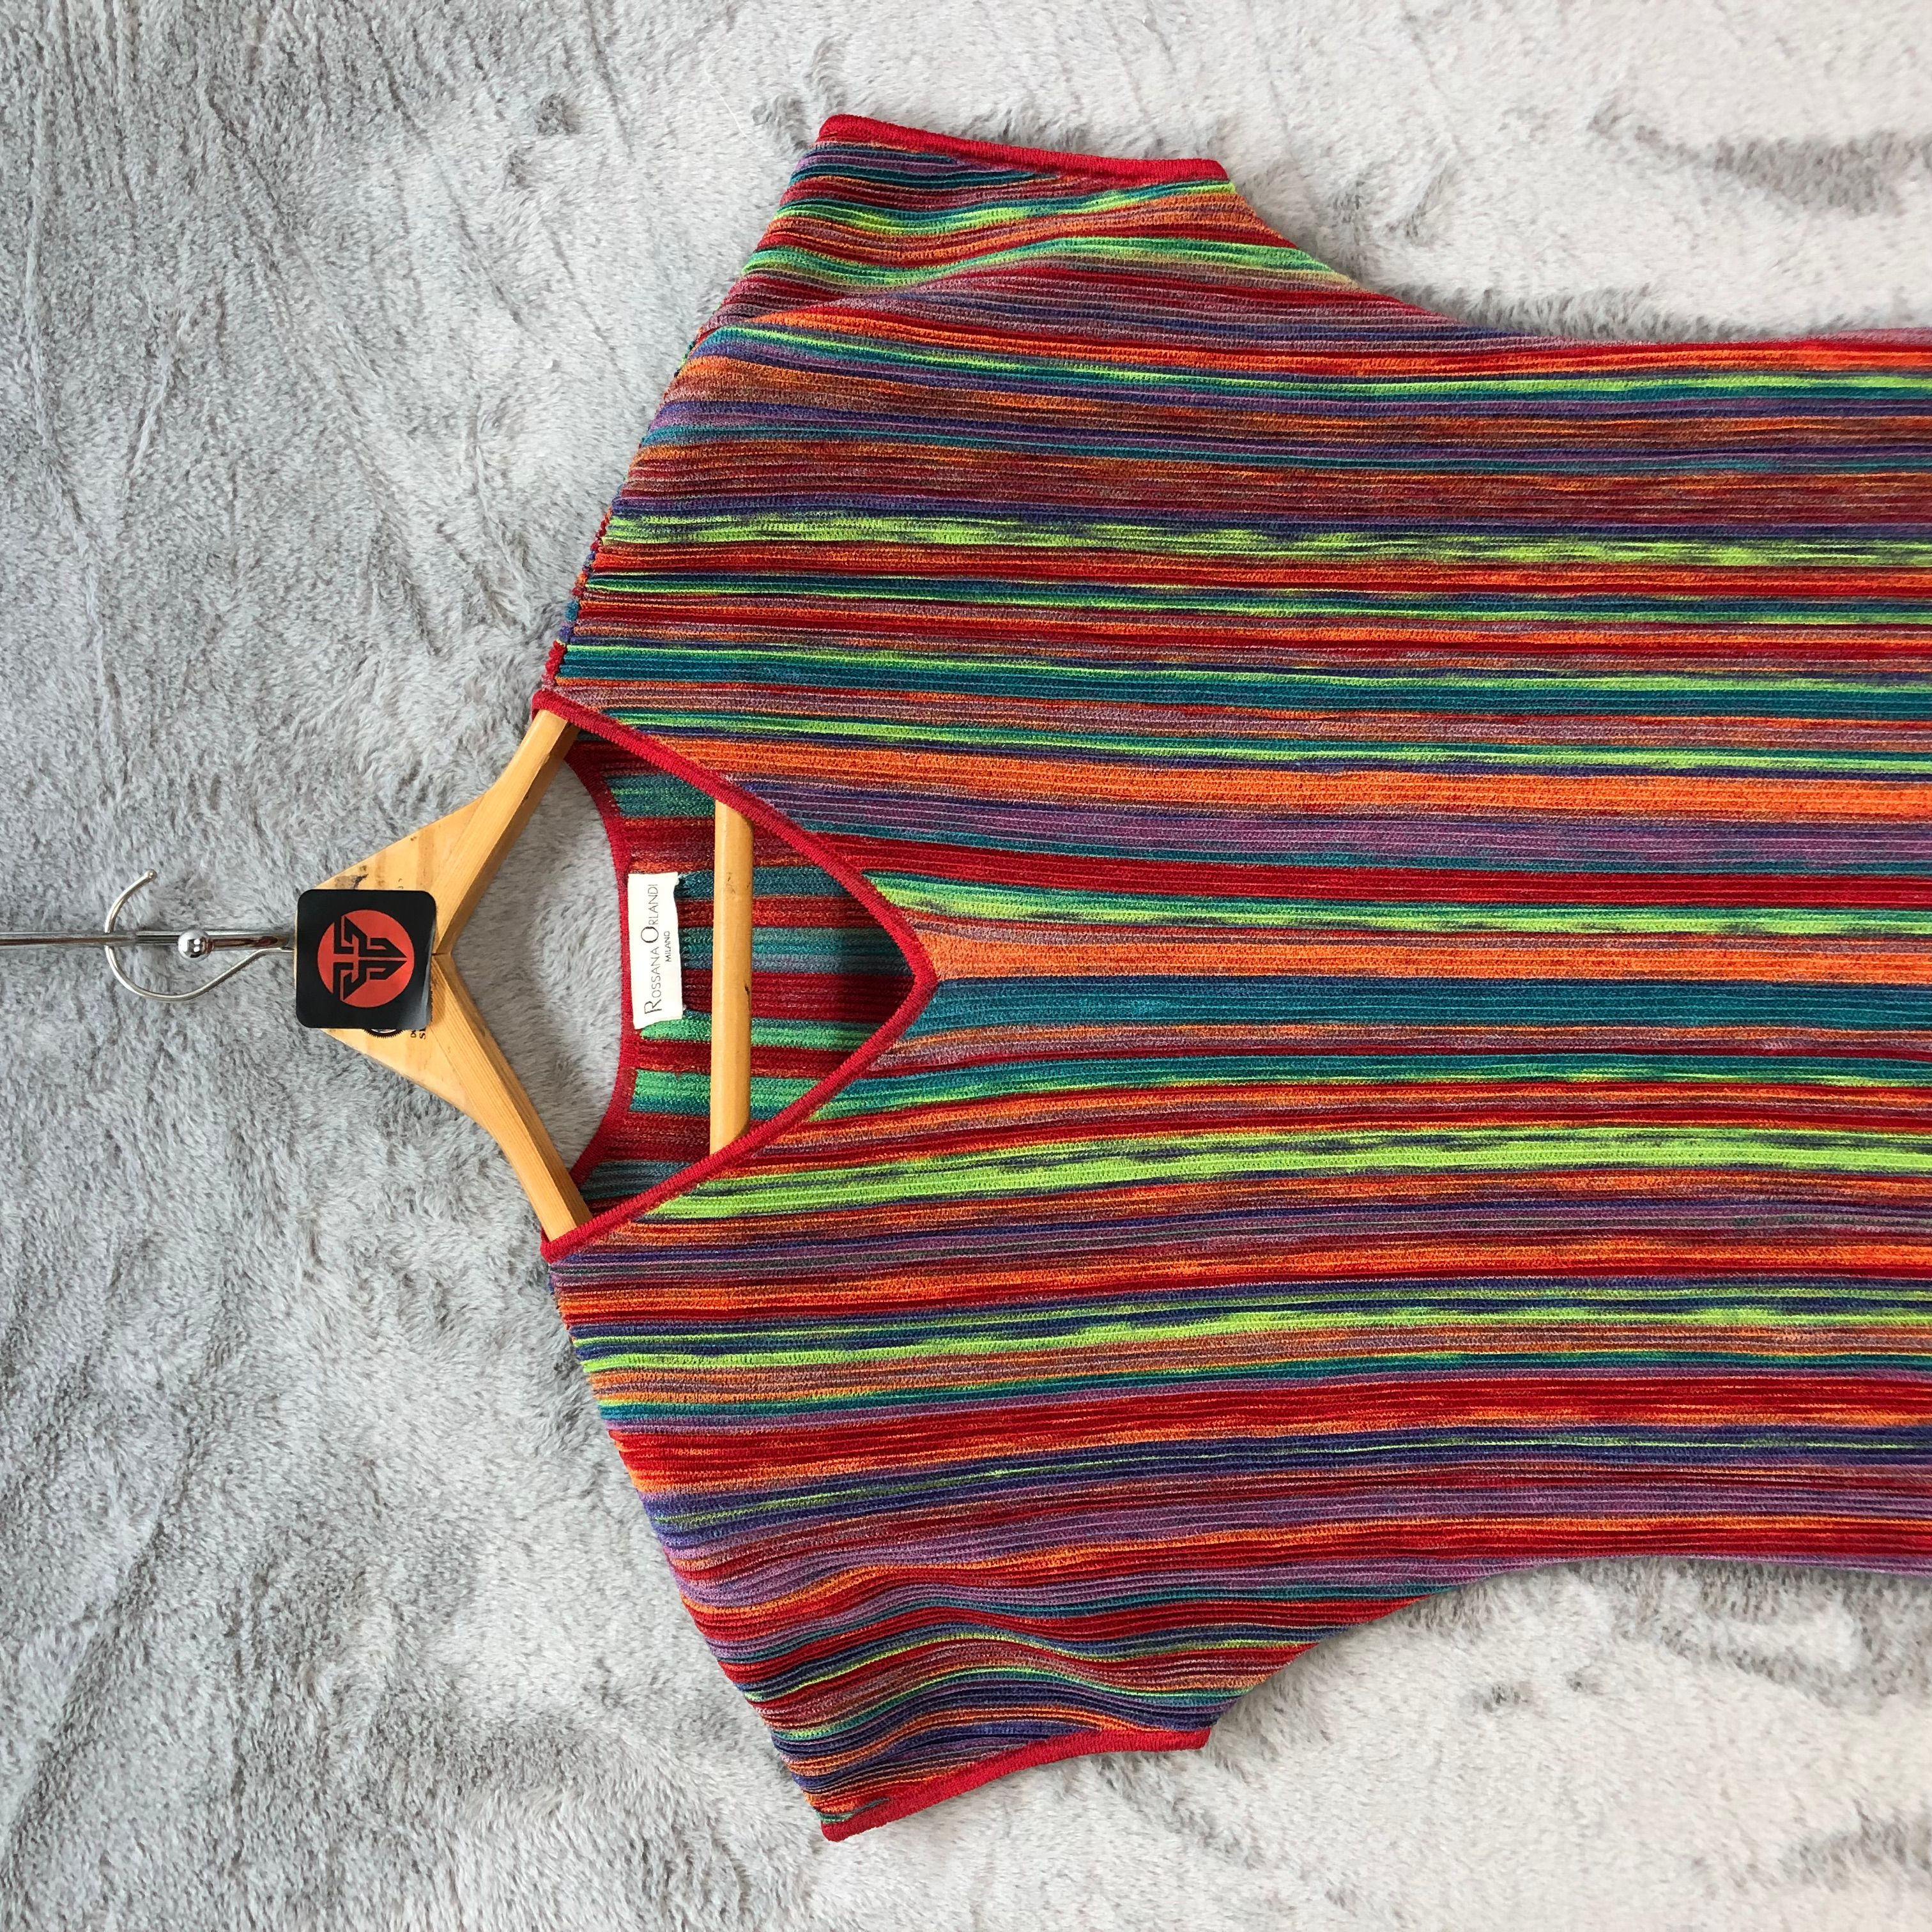 Designer - Vintage Rossana Orlandi Multicolor Pleated Dress #6437-67 - 2